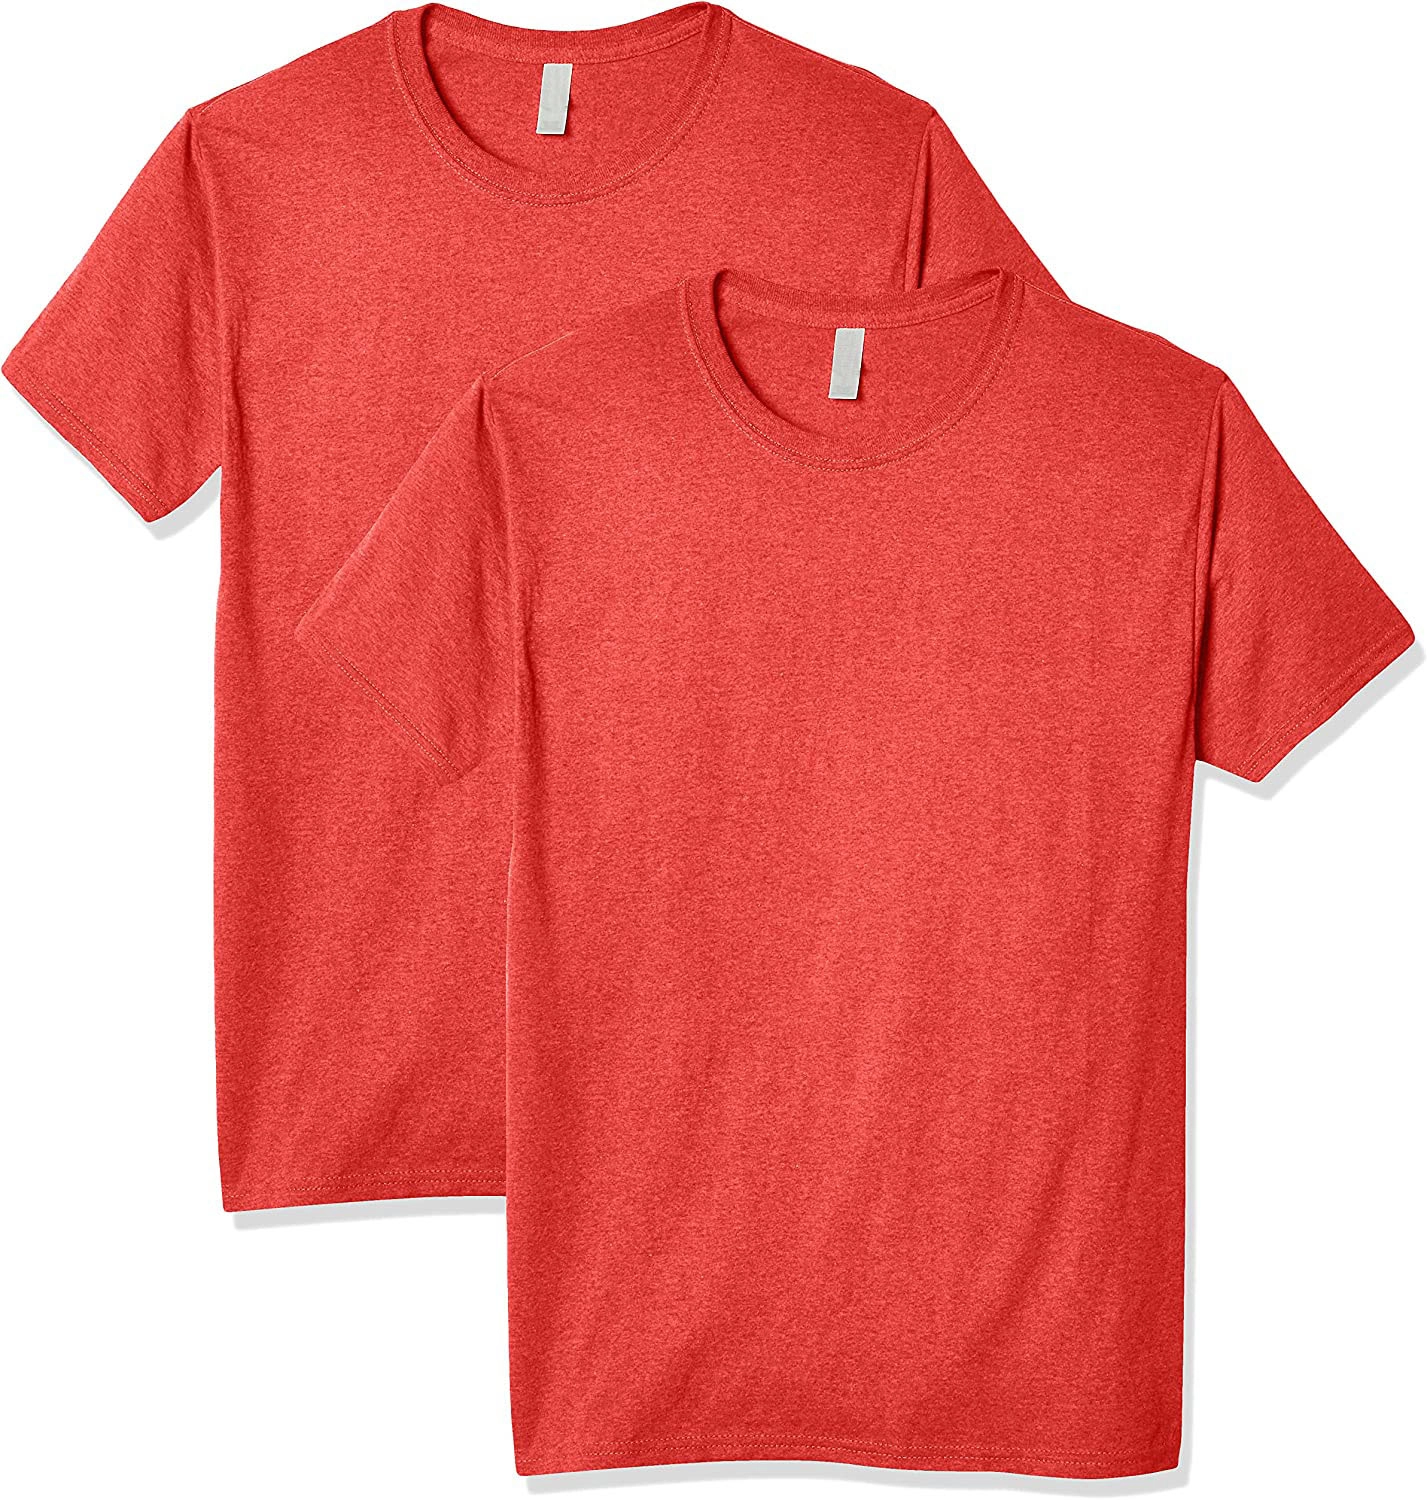 Adult Tri Blend T Shirt from Bangladesh Clothing Manufacturer